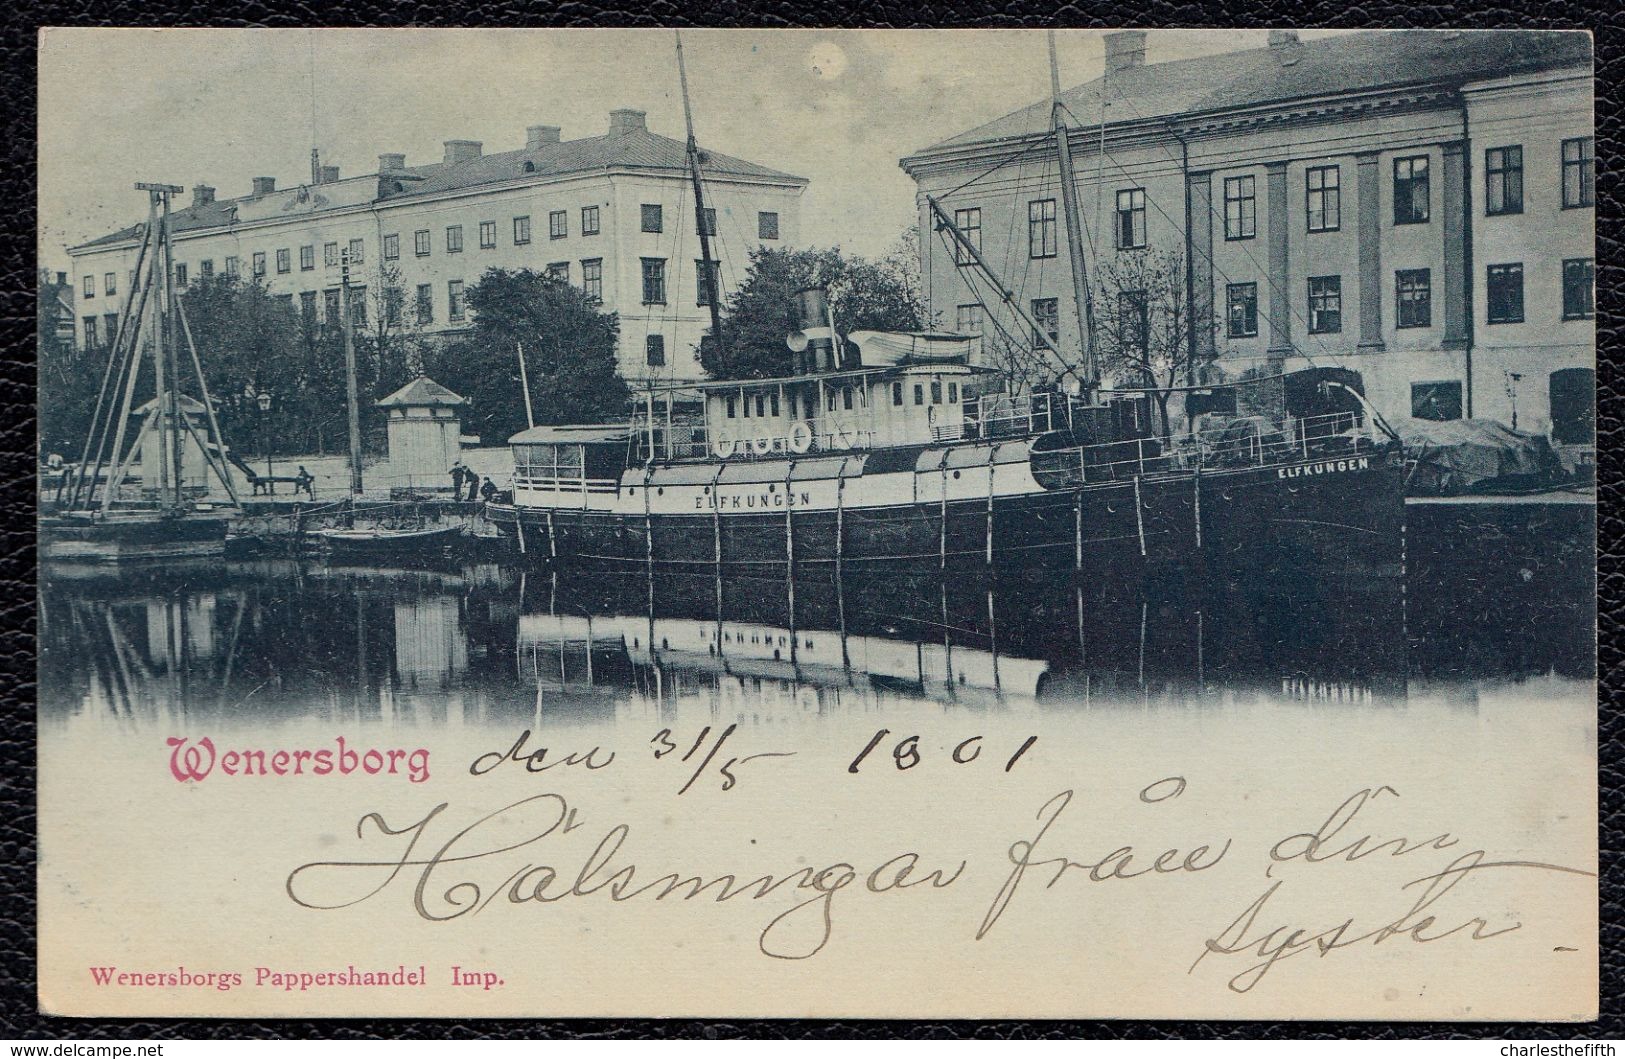 VÄNERSBORG - WENERSBORG --- GREAT VIEW FROM 1901 - RARE - SHIP ** ELFKUNGEN ** - Suecia